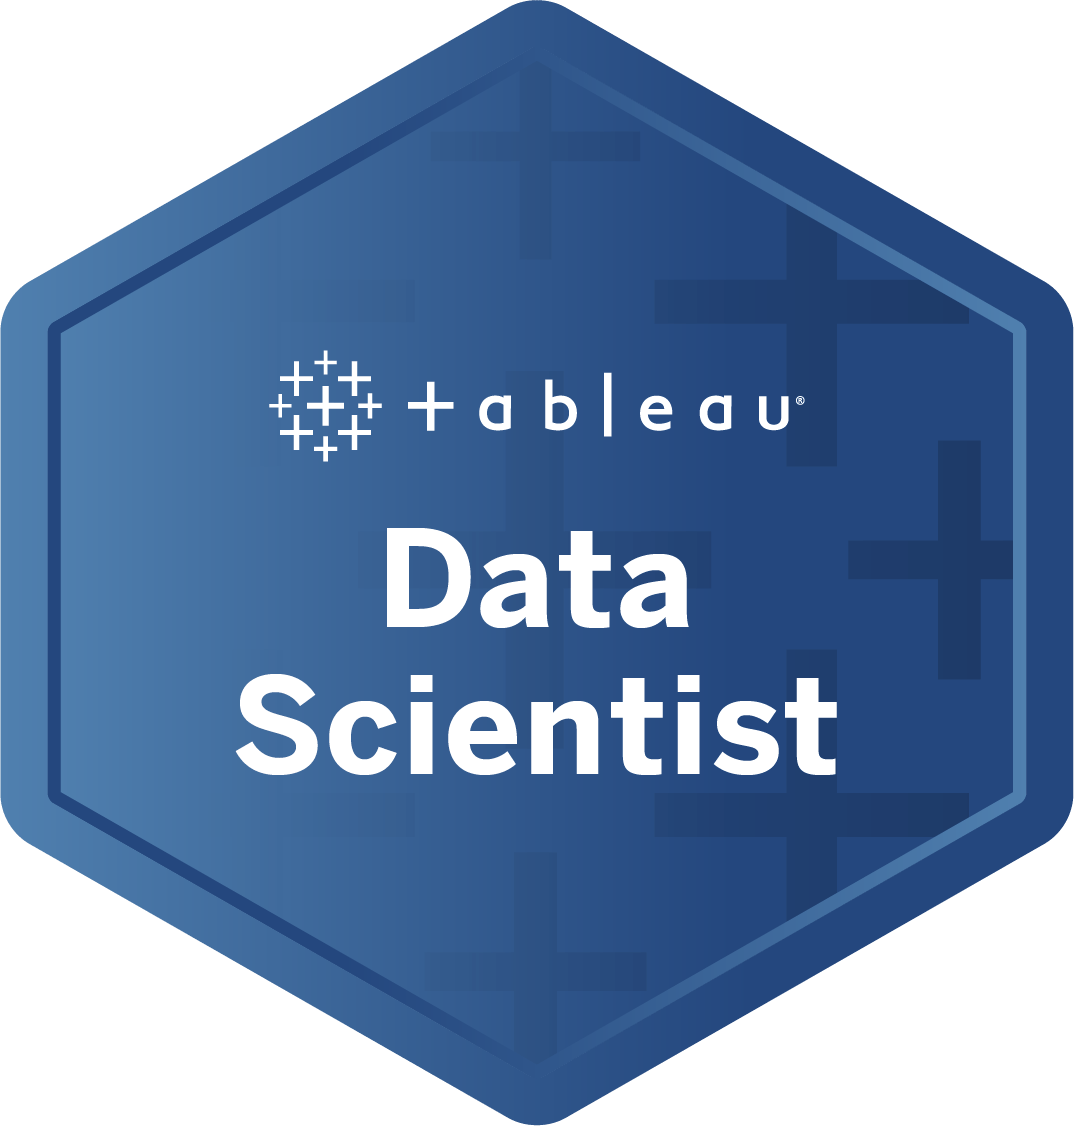  Tableau Certified Data Scientist